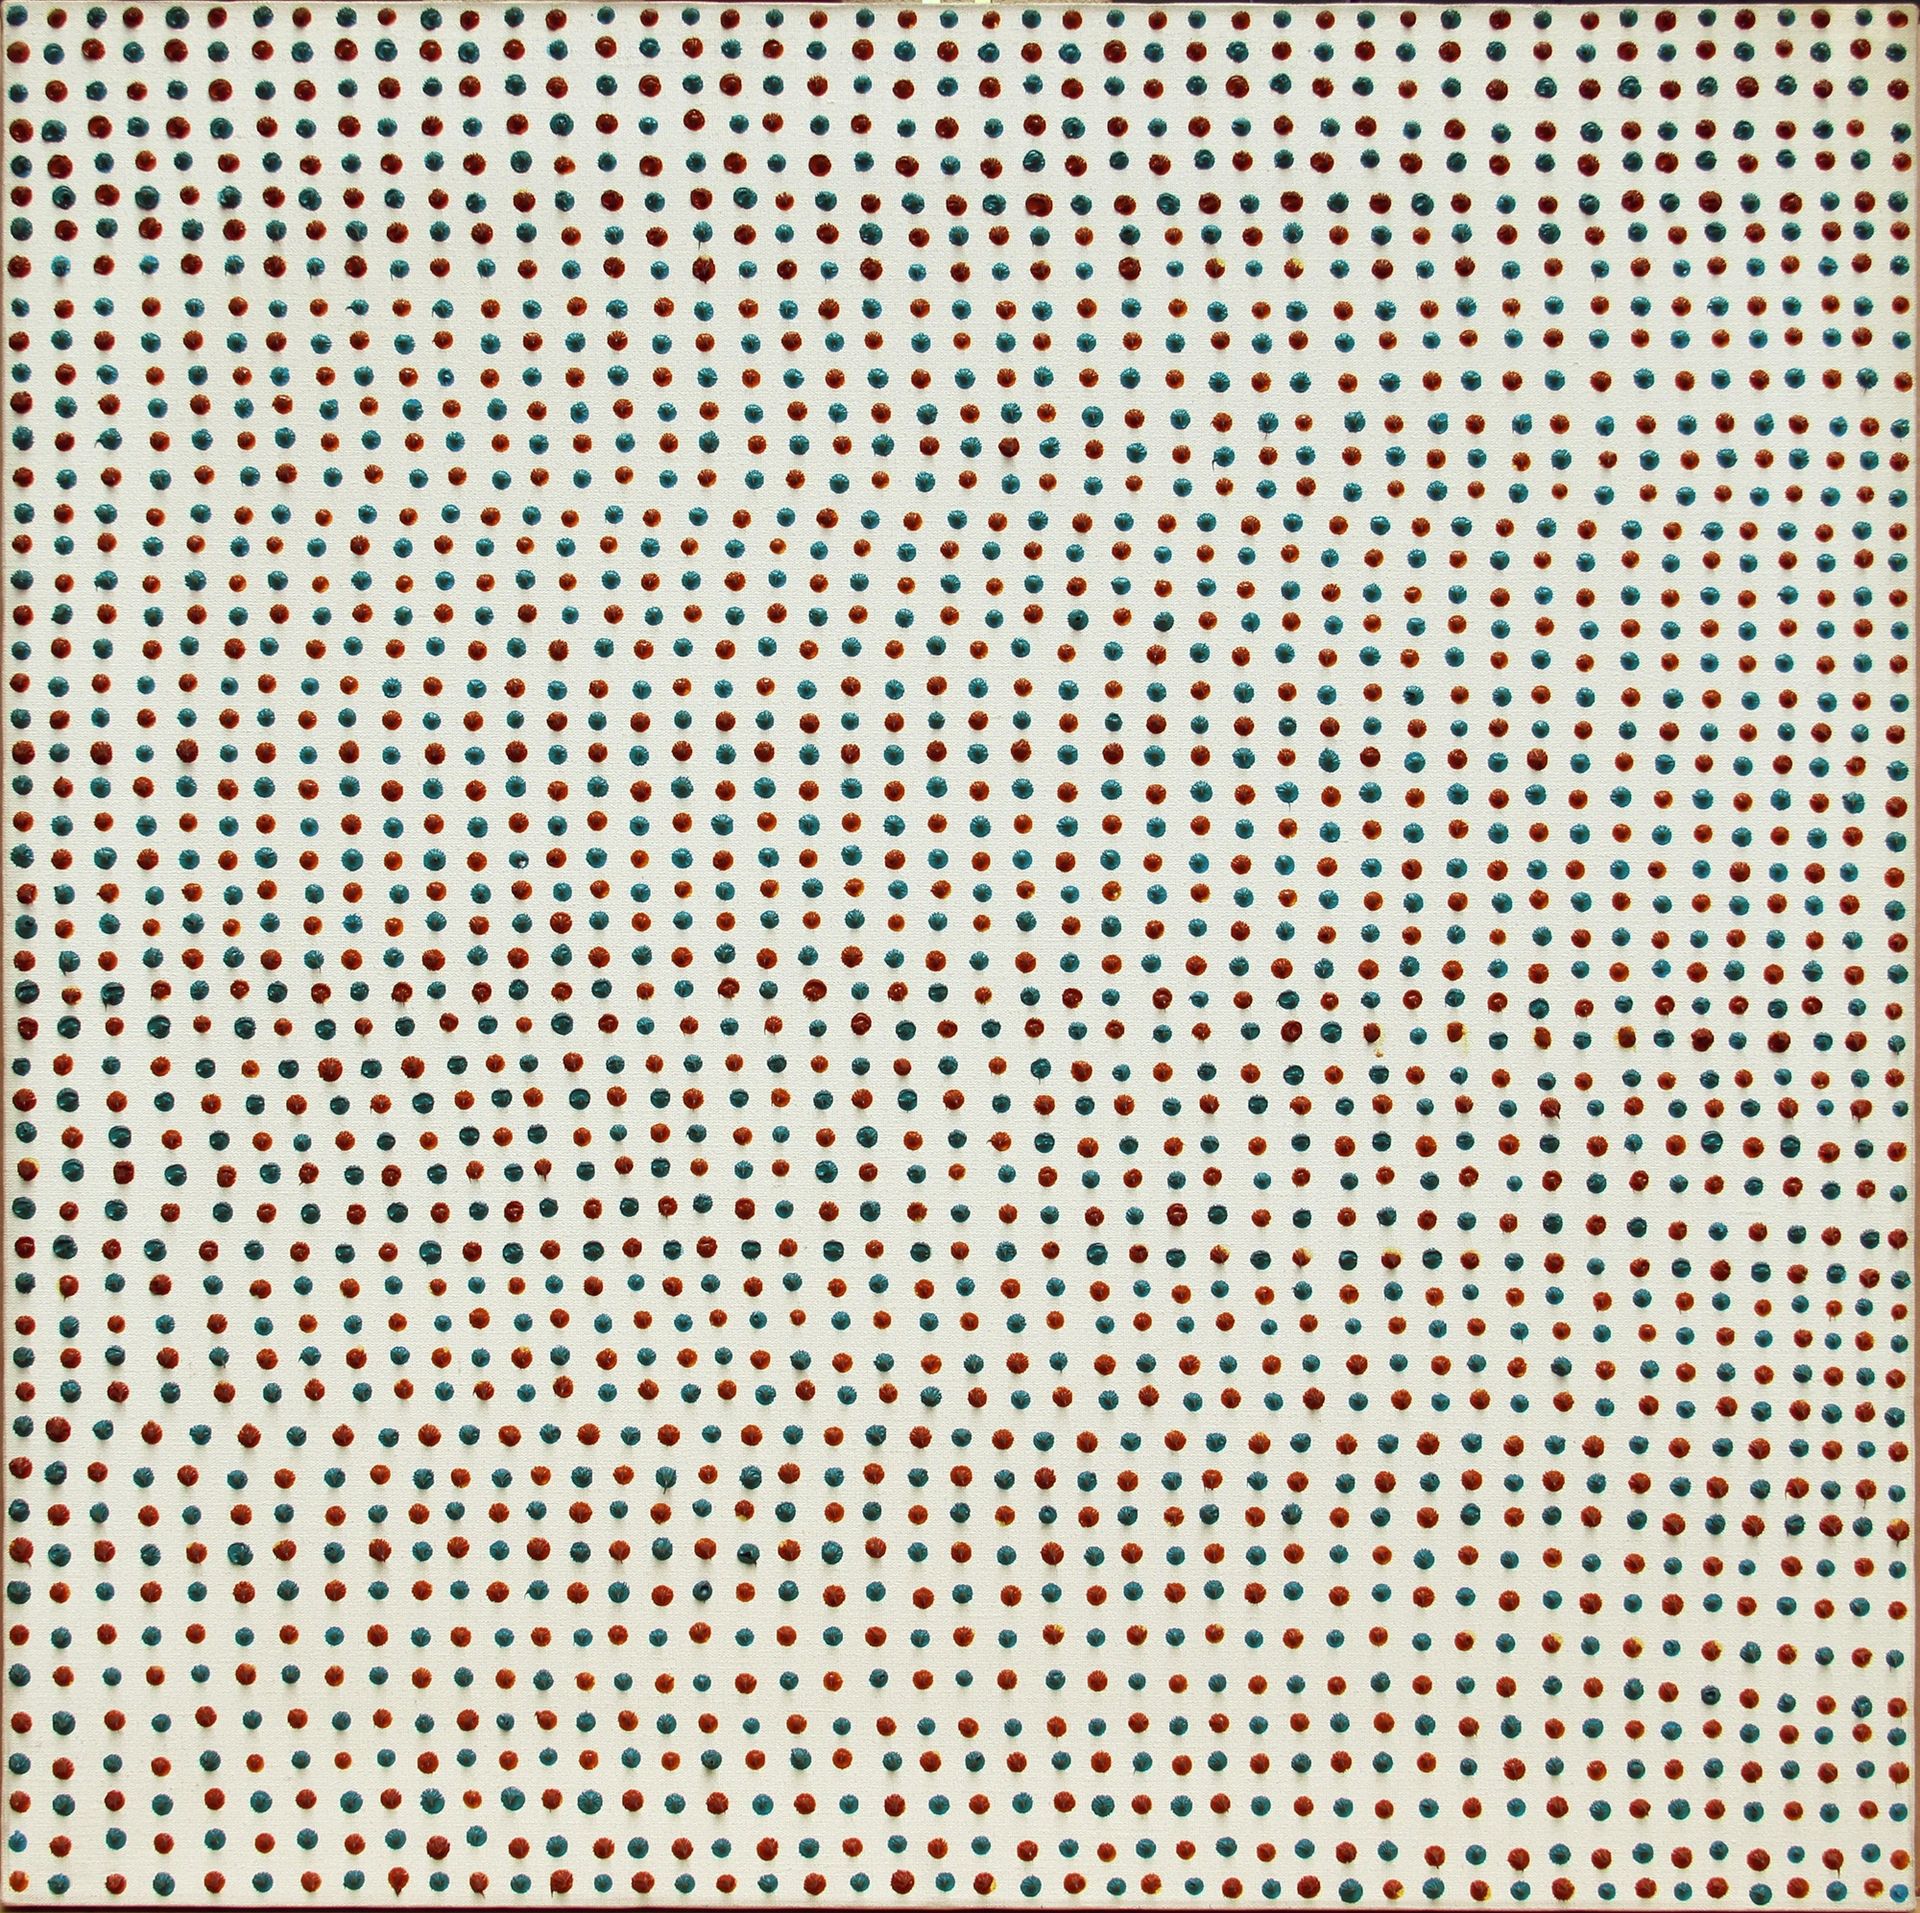 Franco BEMPORAD 2392 Punti 1975, óleo sobre lienzo, cm. 90x90



D. Astrologo, E&hellip;